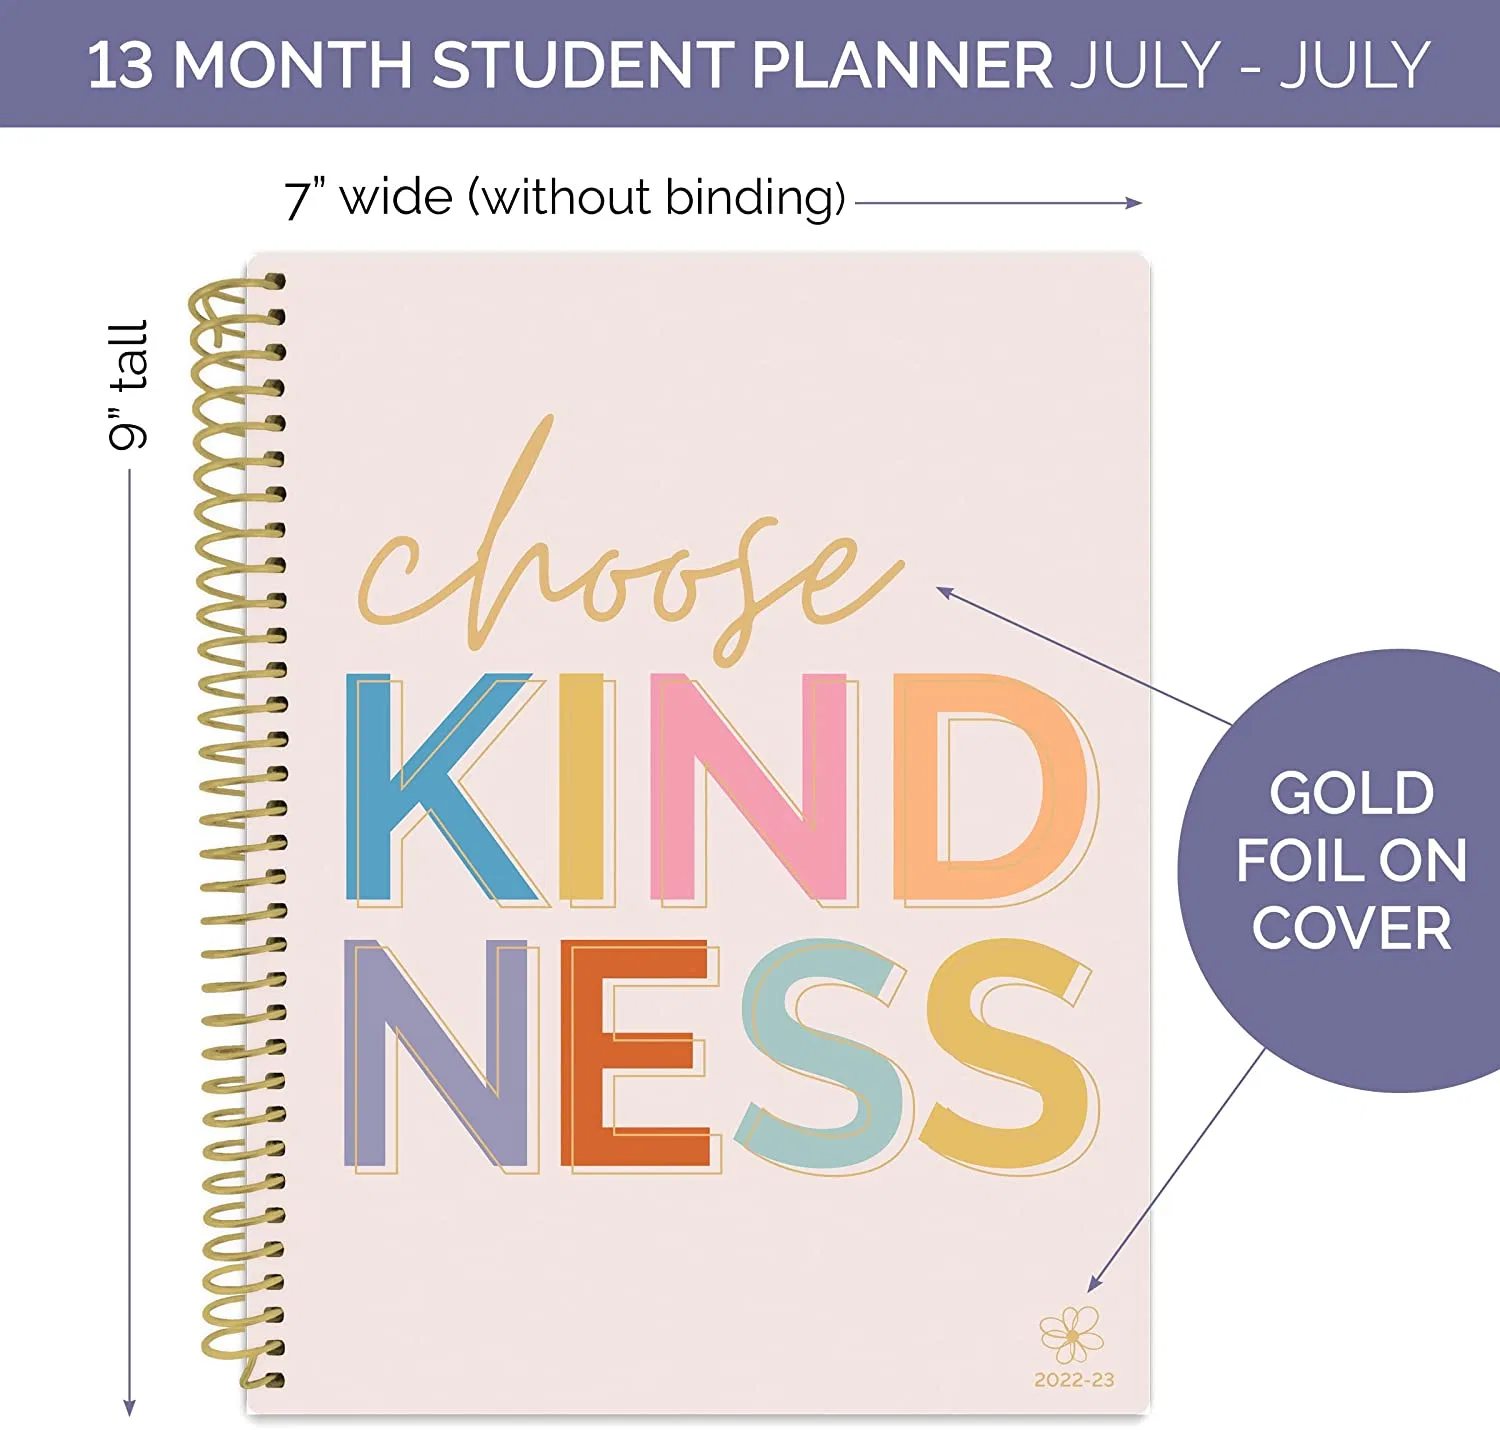 Hardcover Student Planner - Planner semanal y mensual clase de herramientas